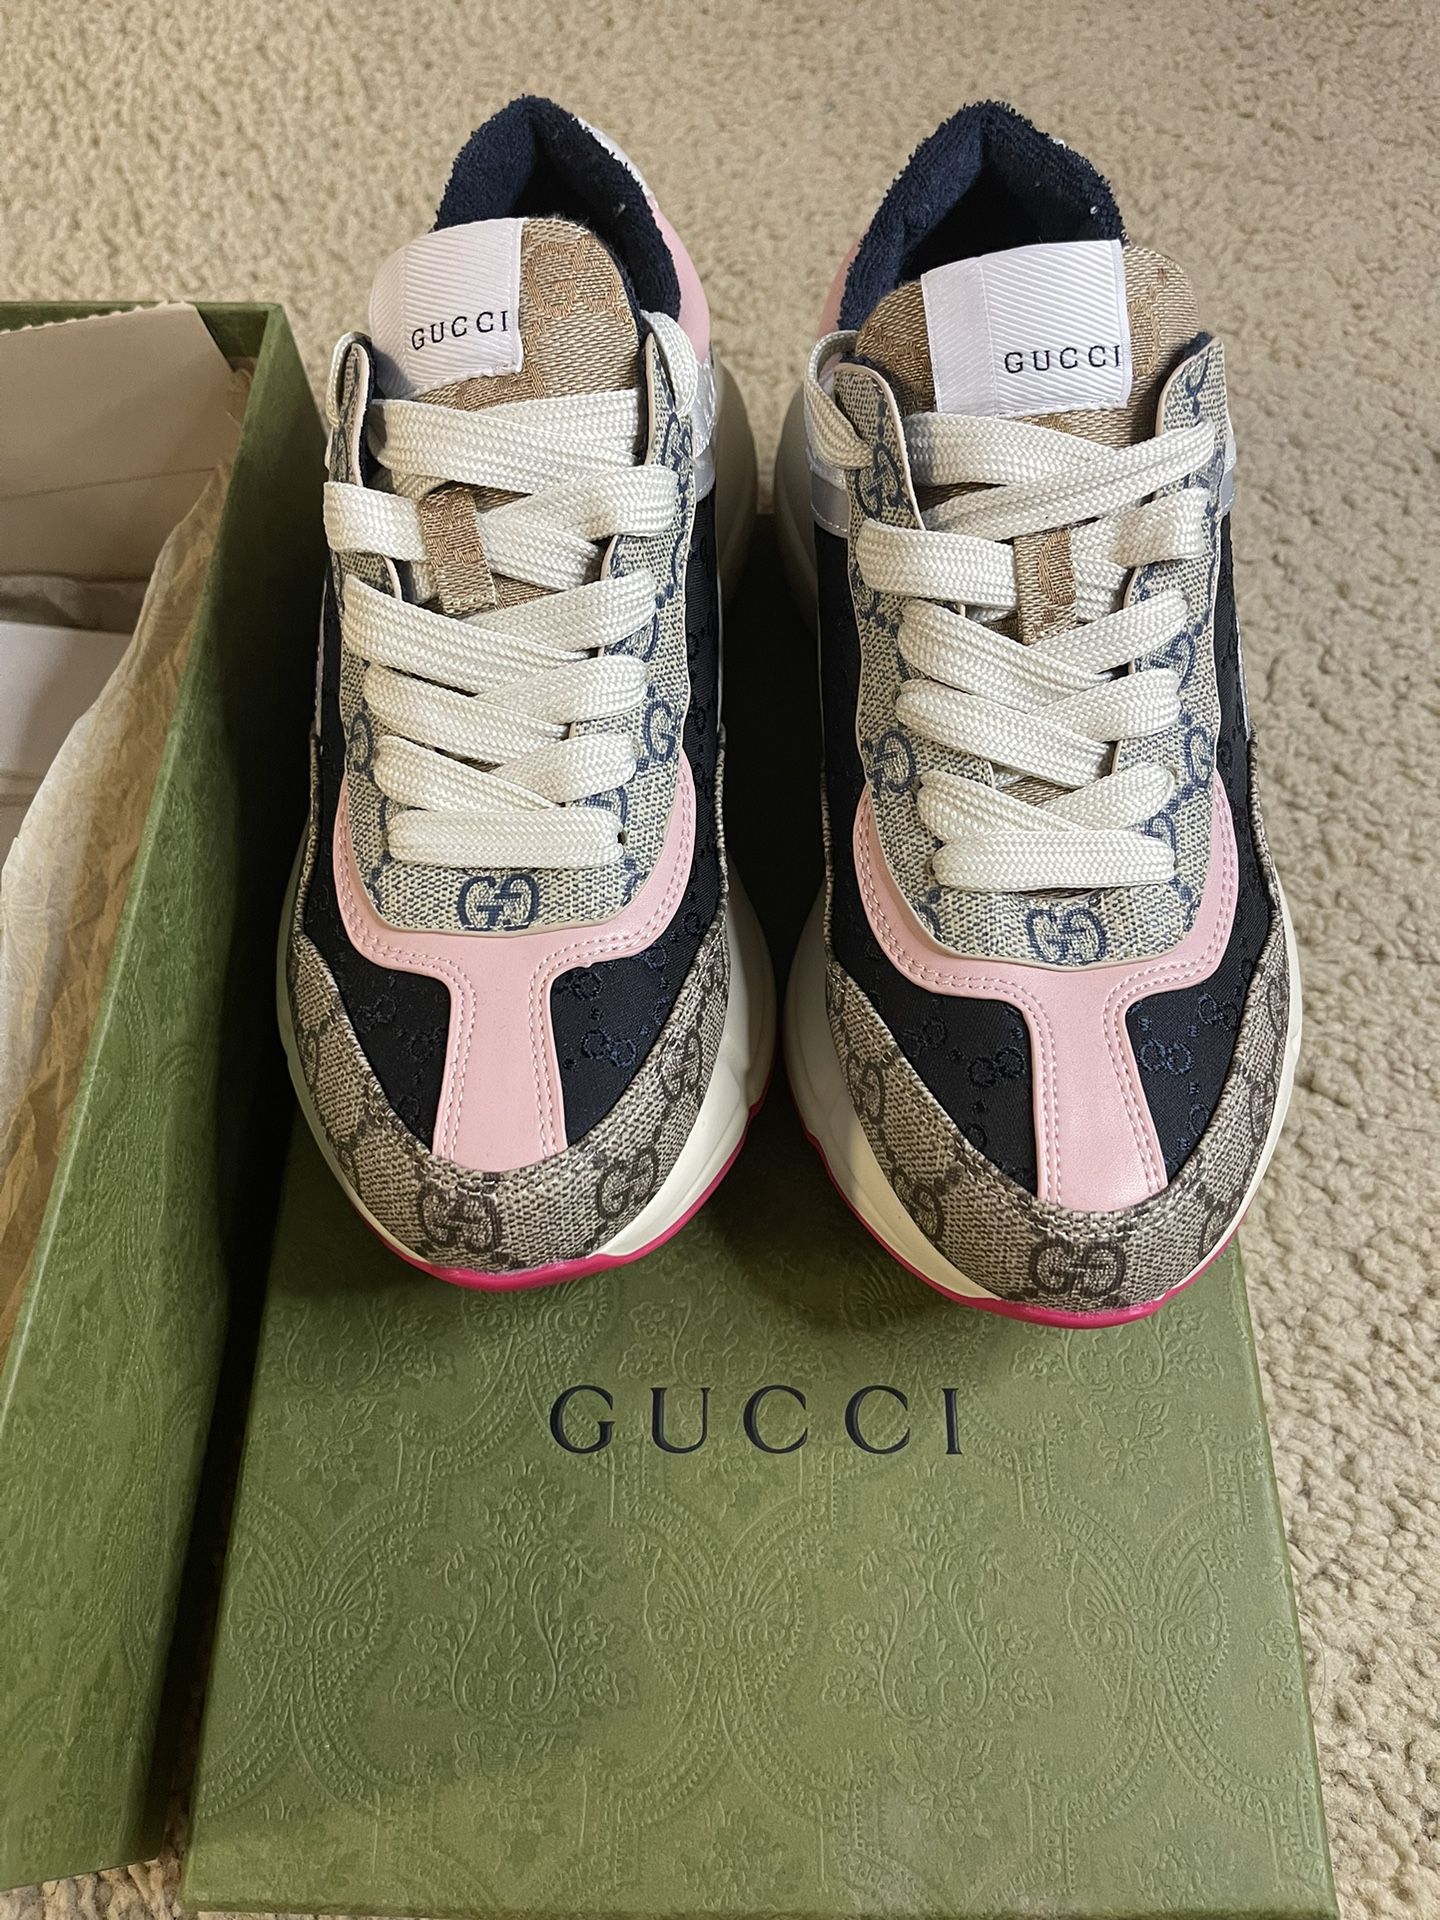 Gucci Shoes Size 6